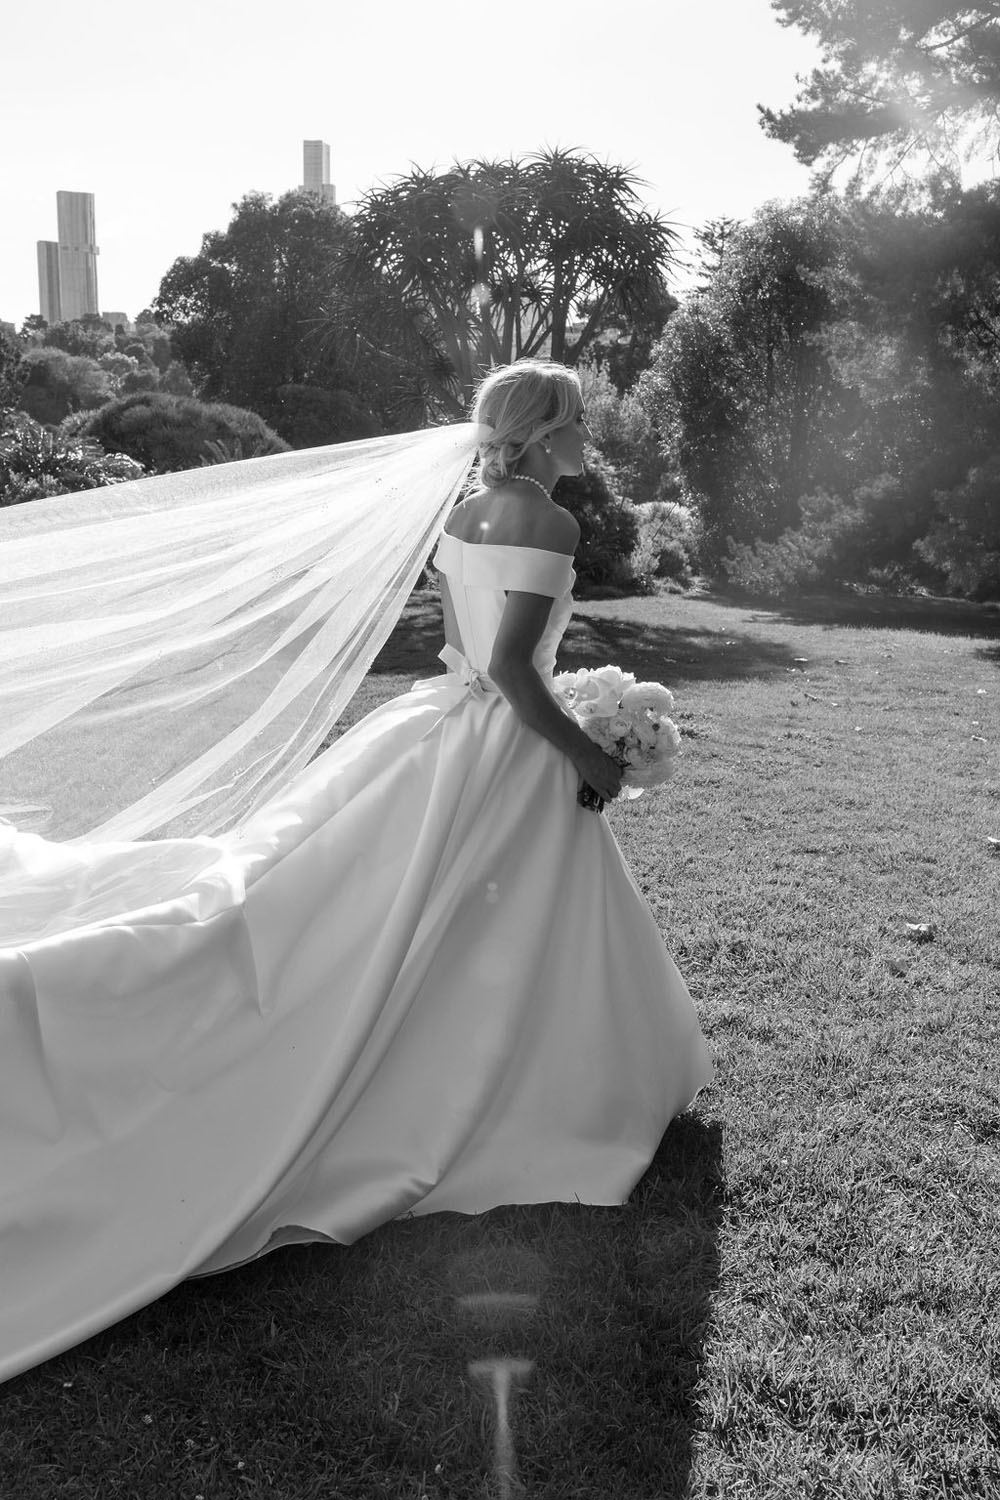 Australian entrepreneur Gretta van Riel's classic wedding